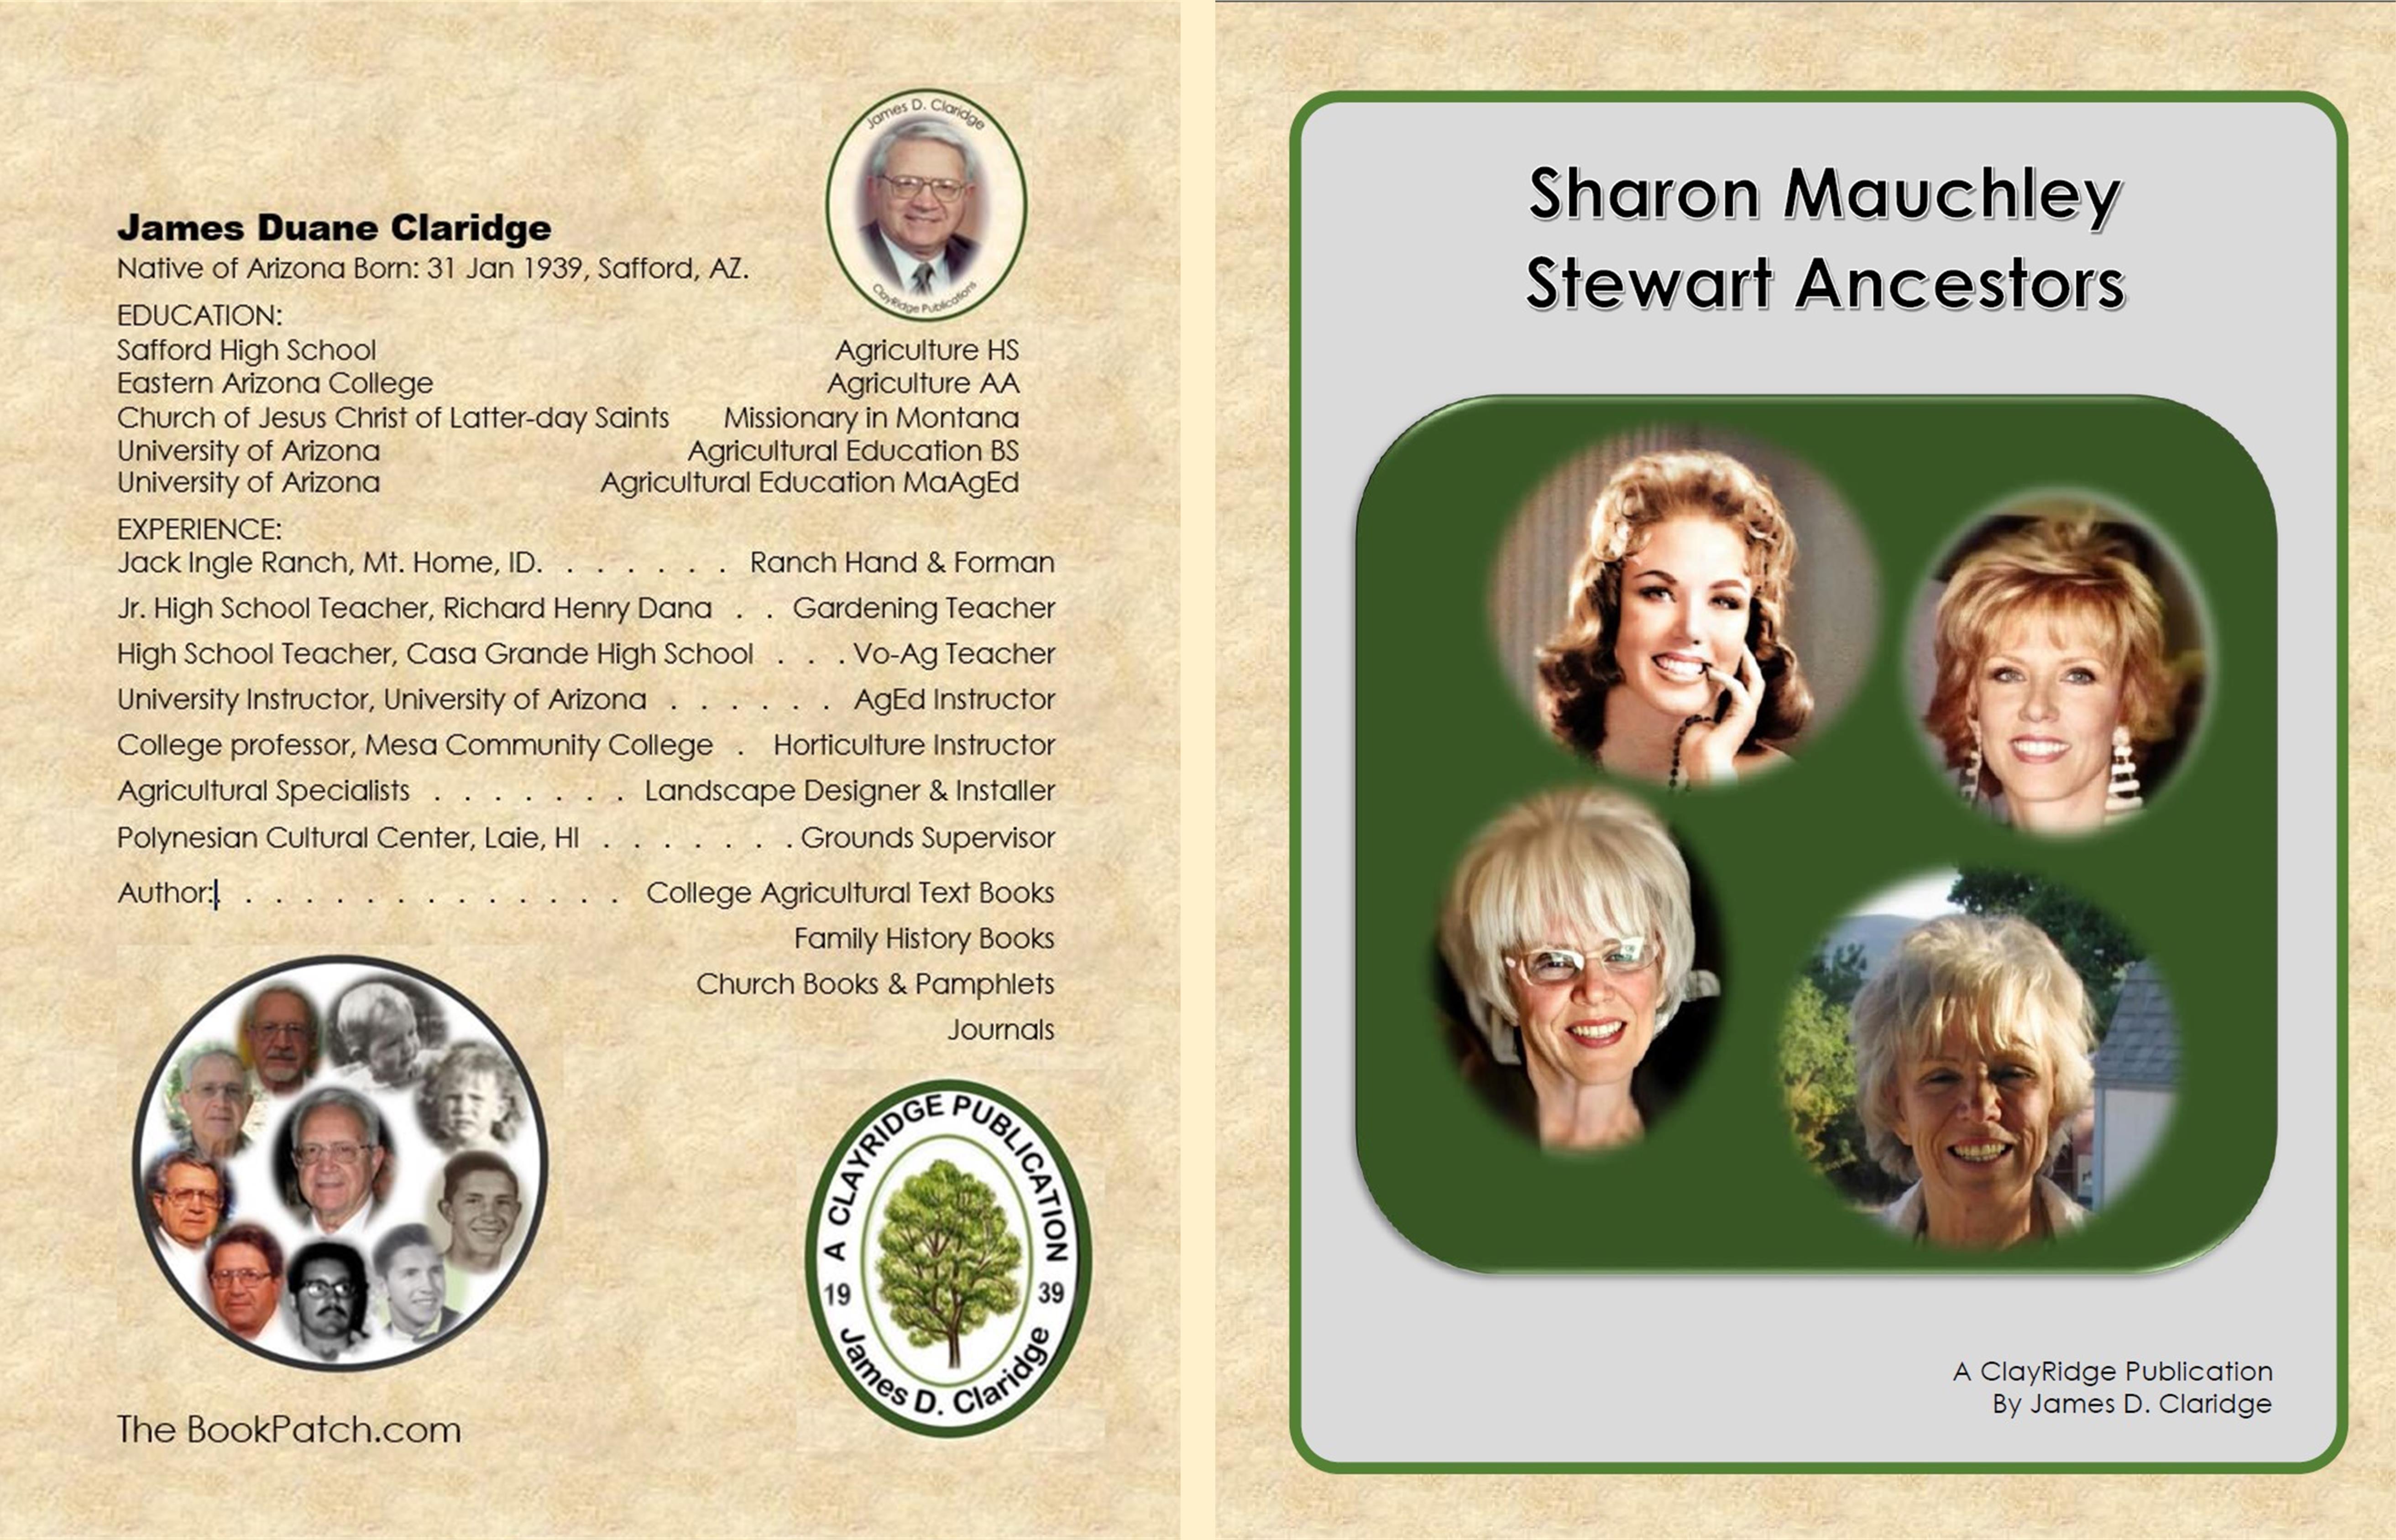 Sharon Mauchley Steward Ancestors cover image